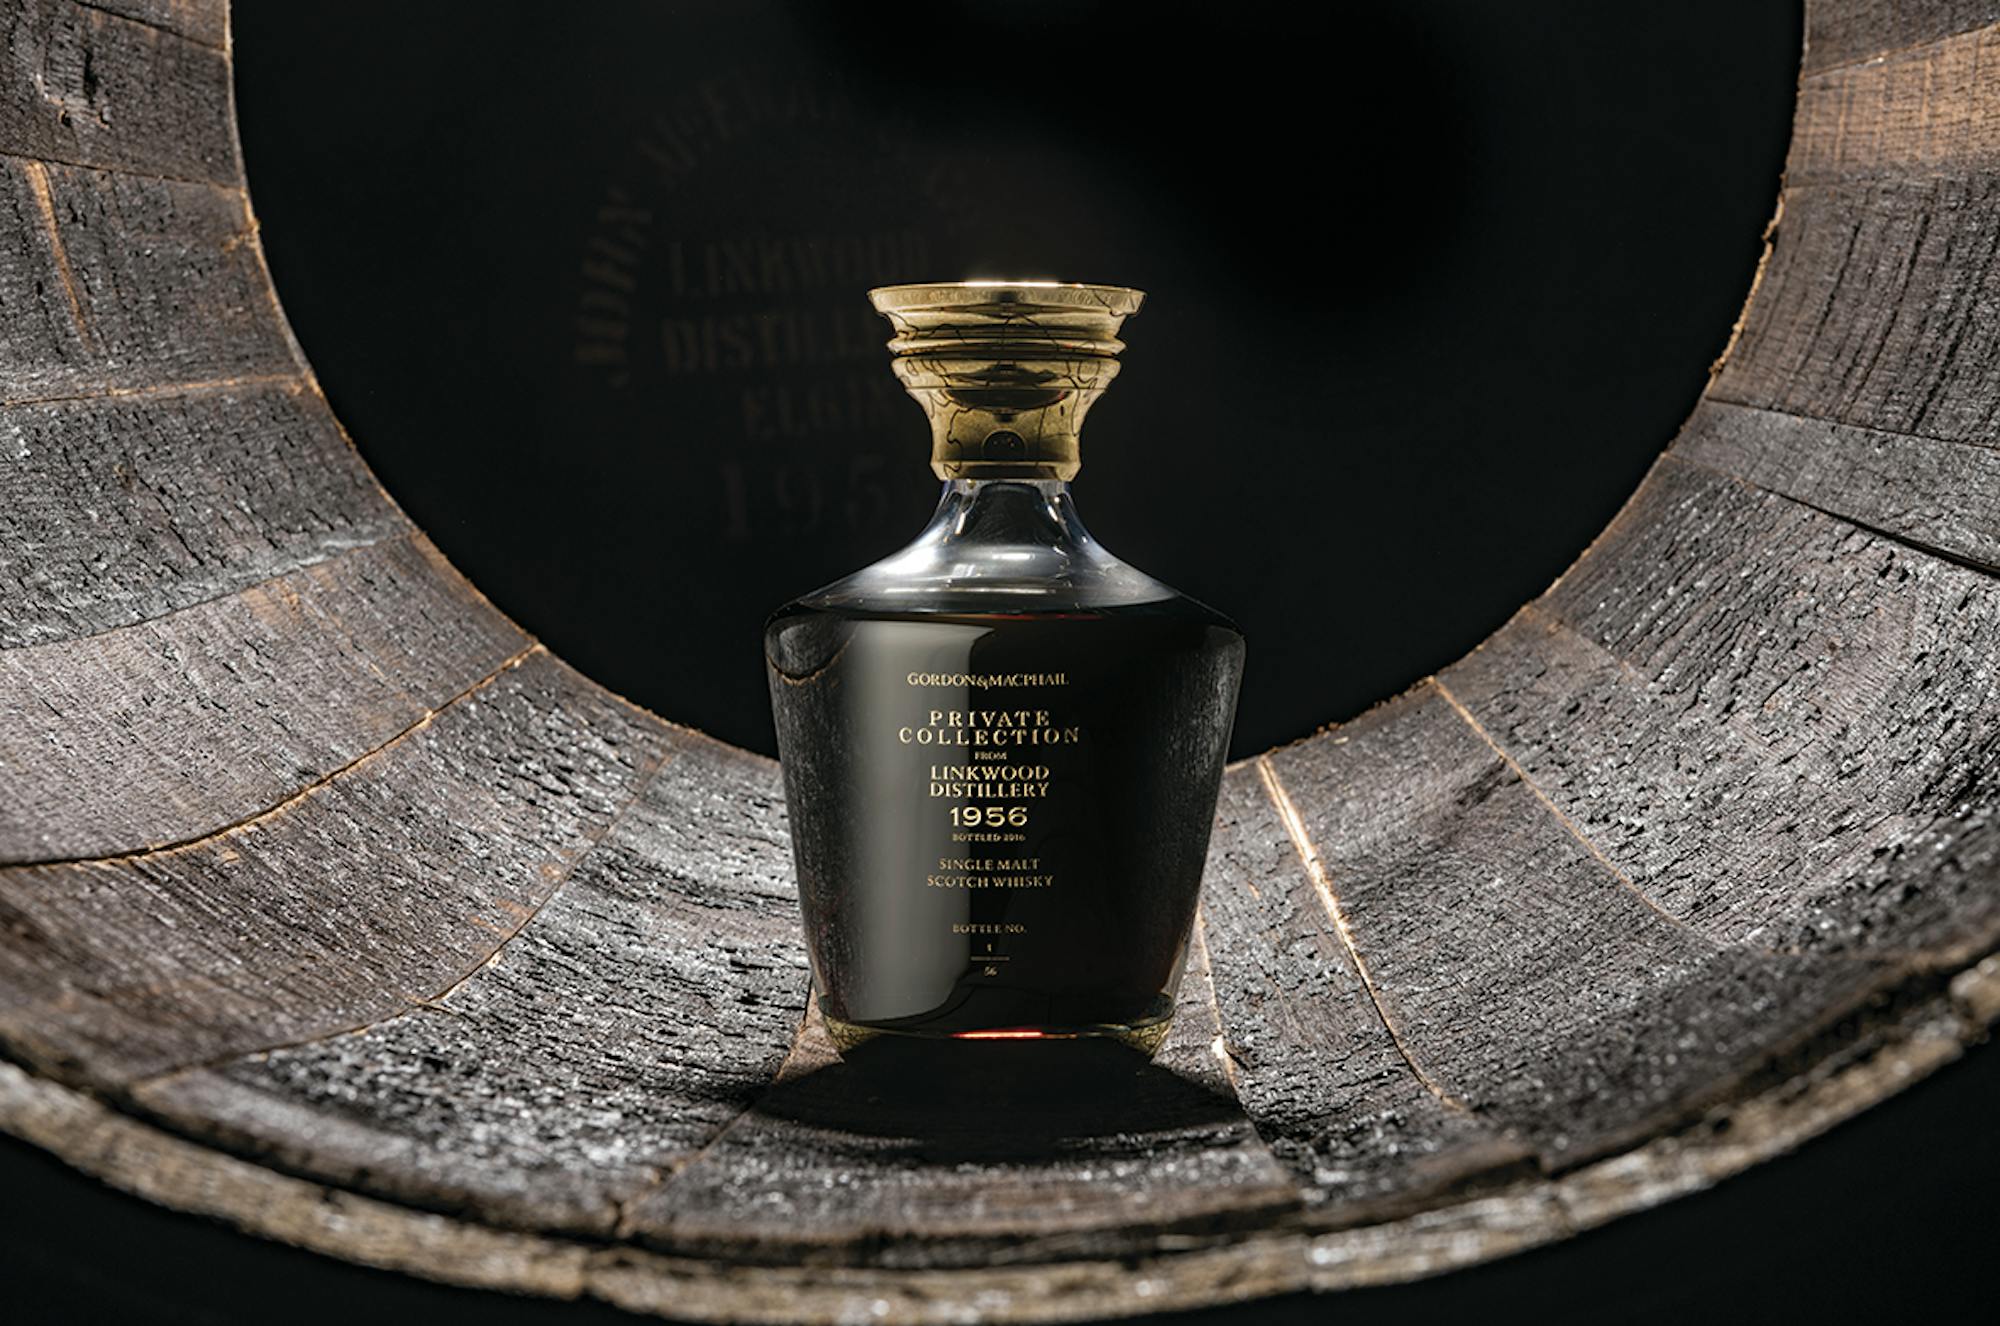 Gordon & MacPhail unveils rare 1950s single malt whisky from Linkwood Distillery